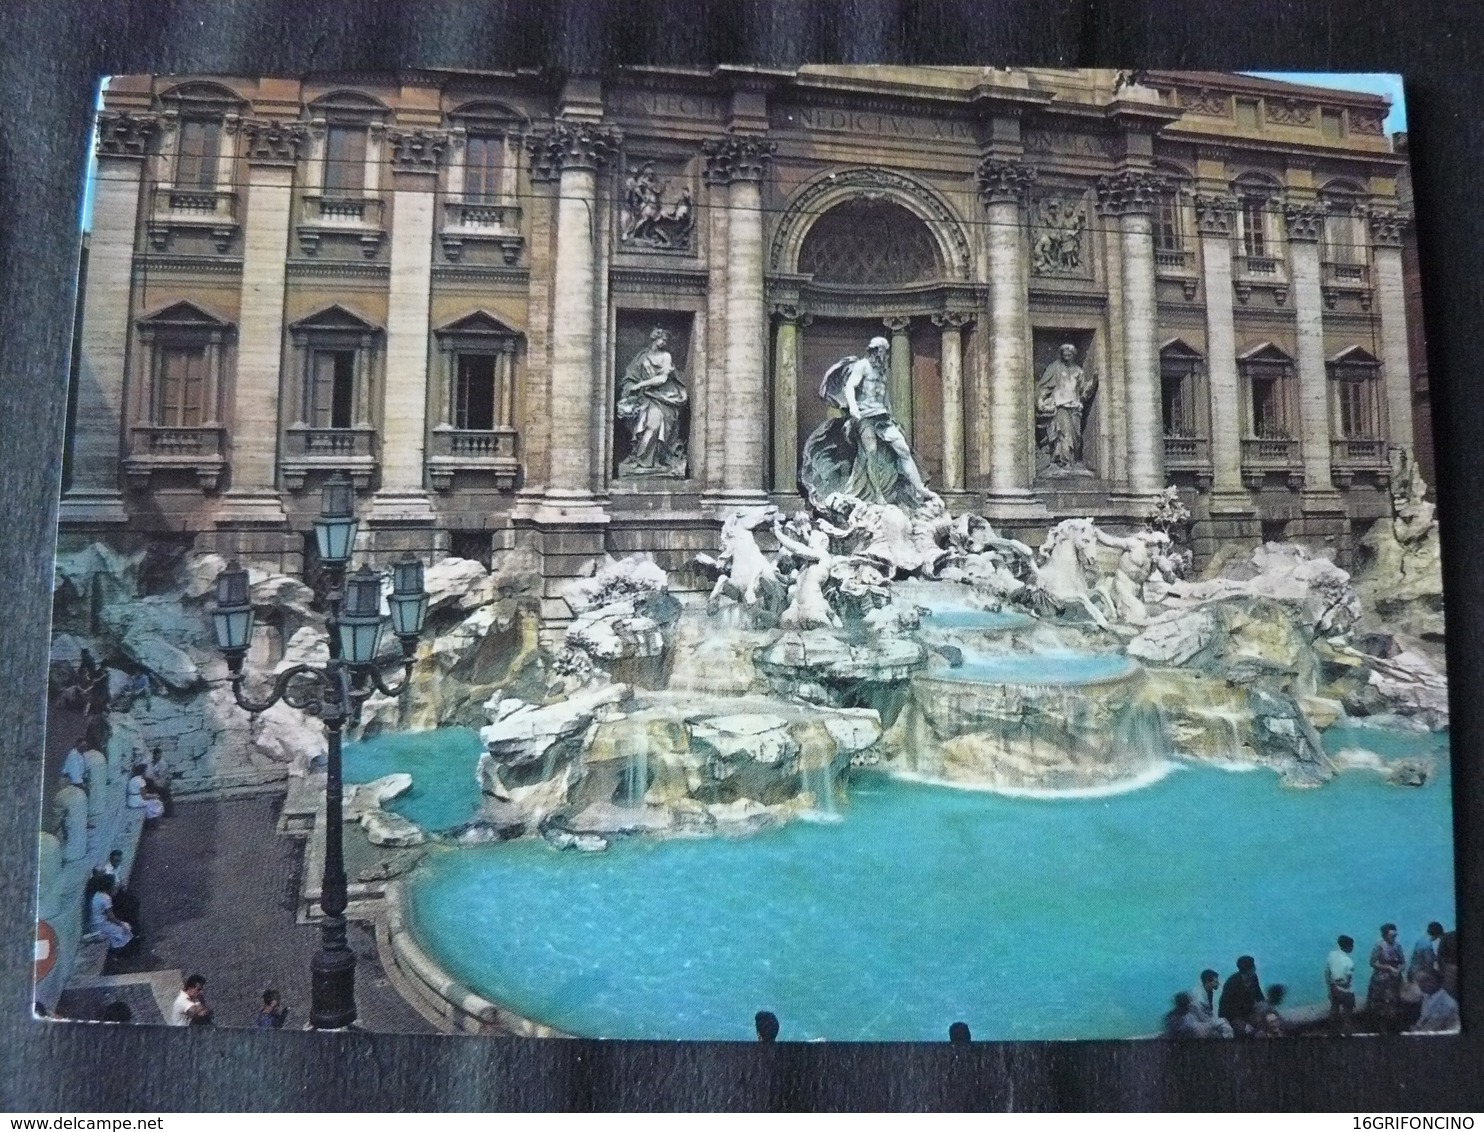 8 ANCIENT BEAUTIFULS POSTCARDS OF ROME..1959-61-63-63-63-64-64-69 ..//..8 BELLE CARTOLINE VIAGGIATE DI ROMA